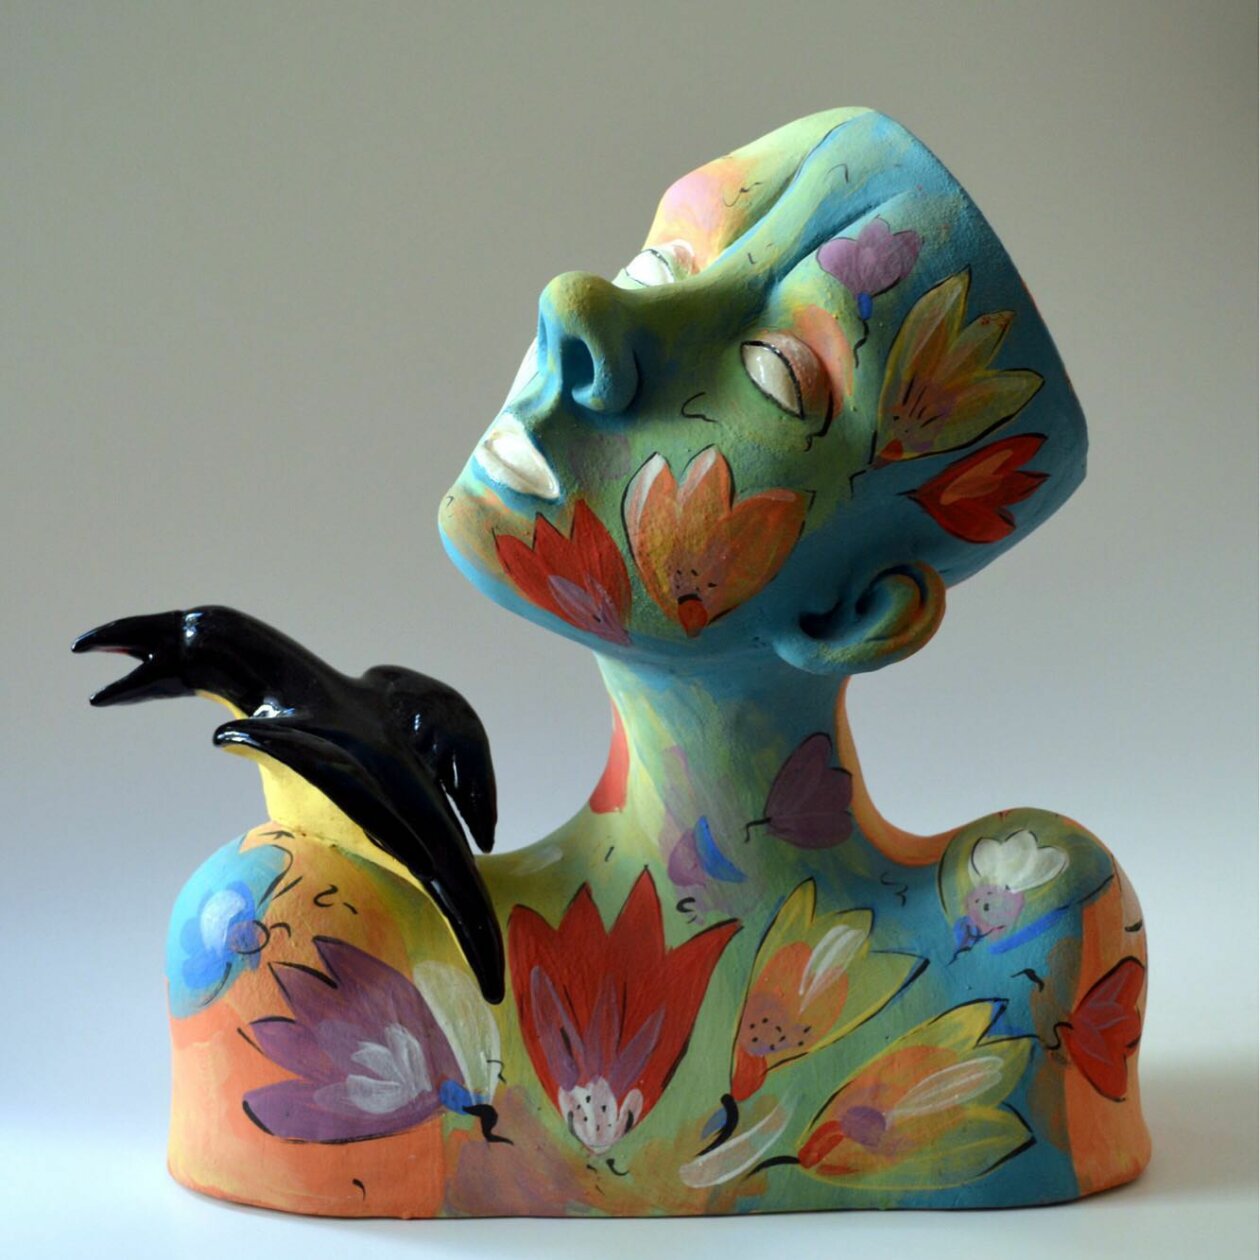 The Otherworldly Ceramic Creatures Of Inna Olshansky (12)